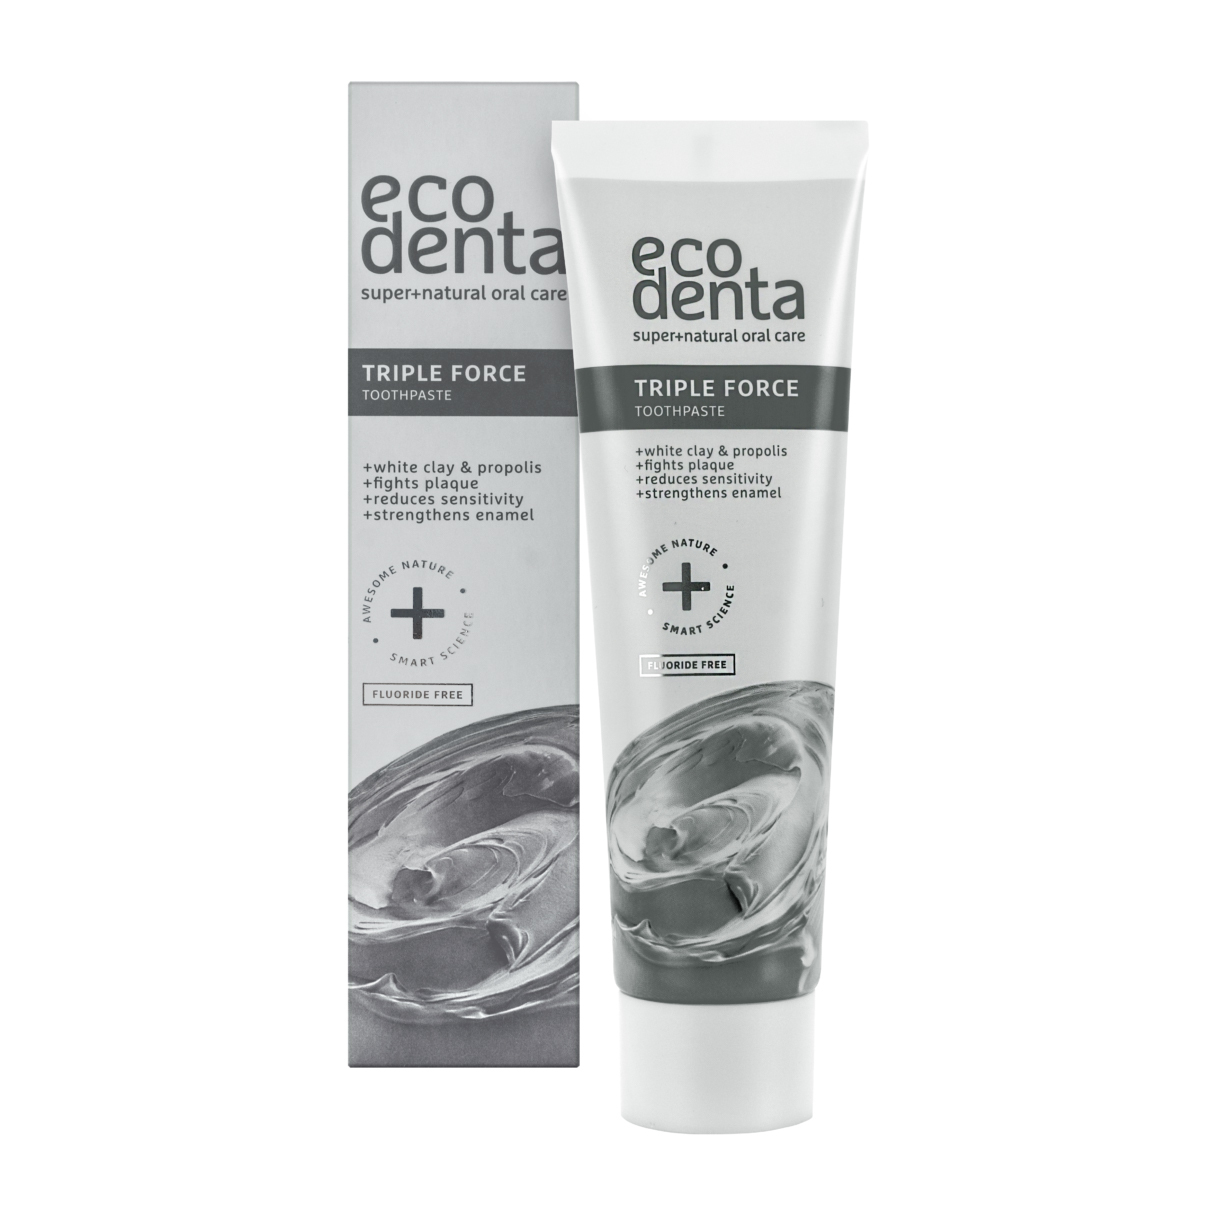 Eco denta 三效護理牙膏